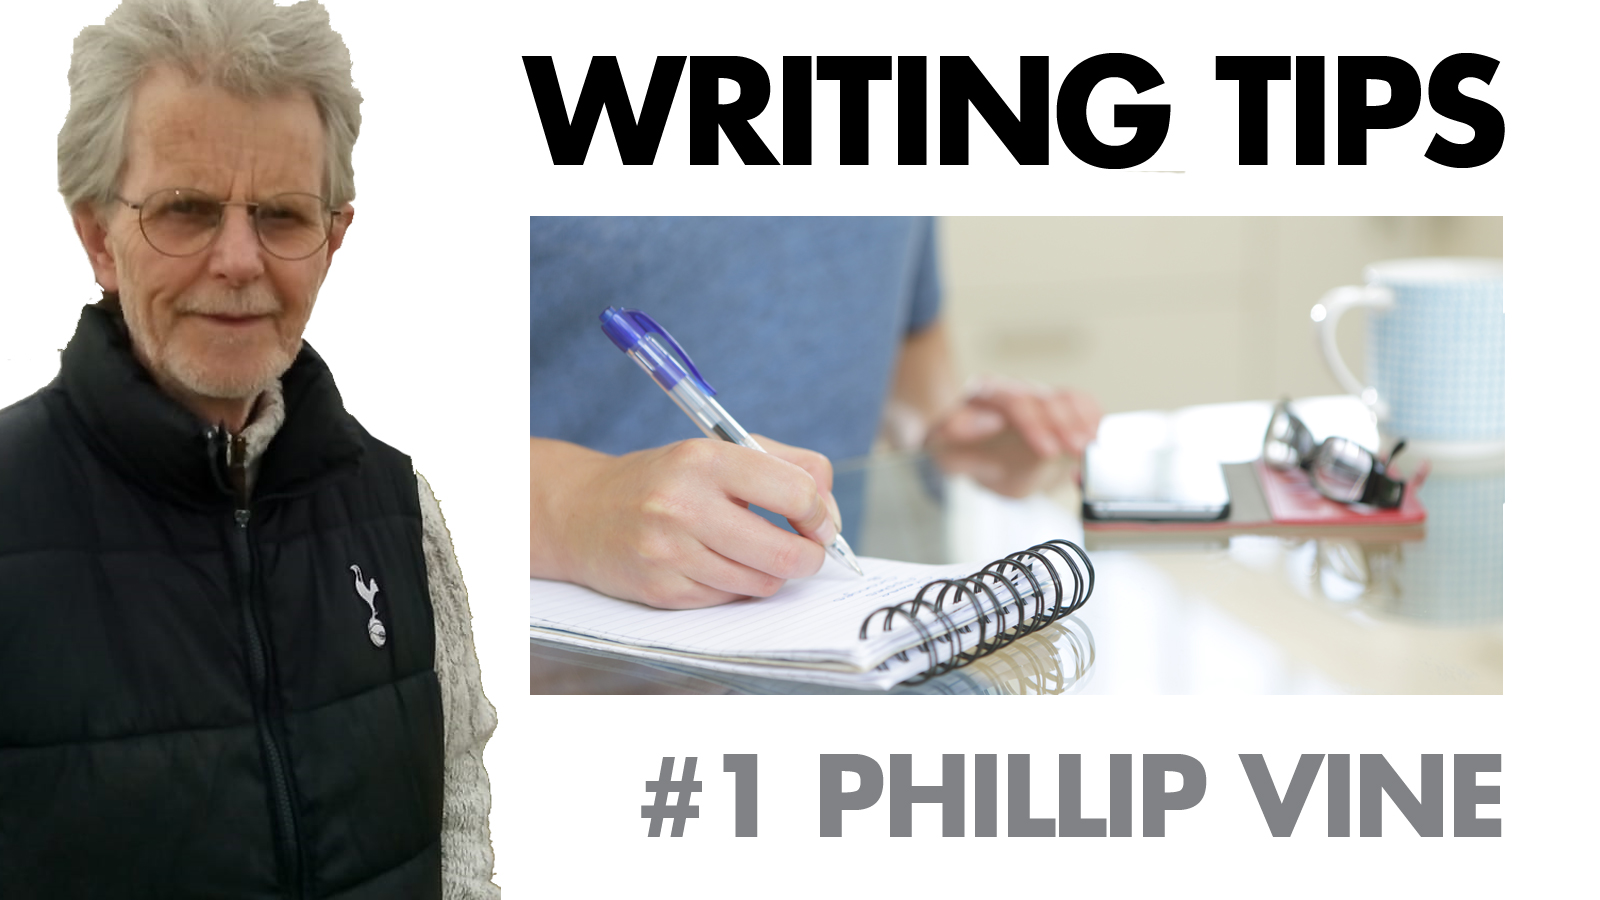 ADVICE FOR WRITERS #1: PHILLIP VINE